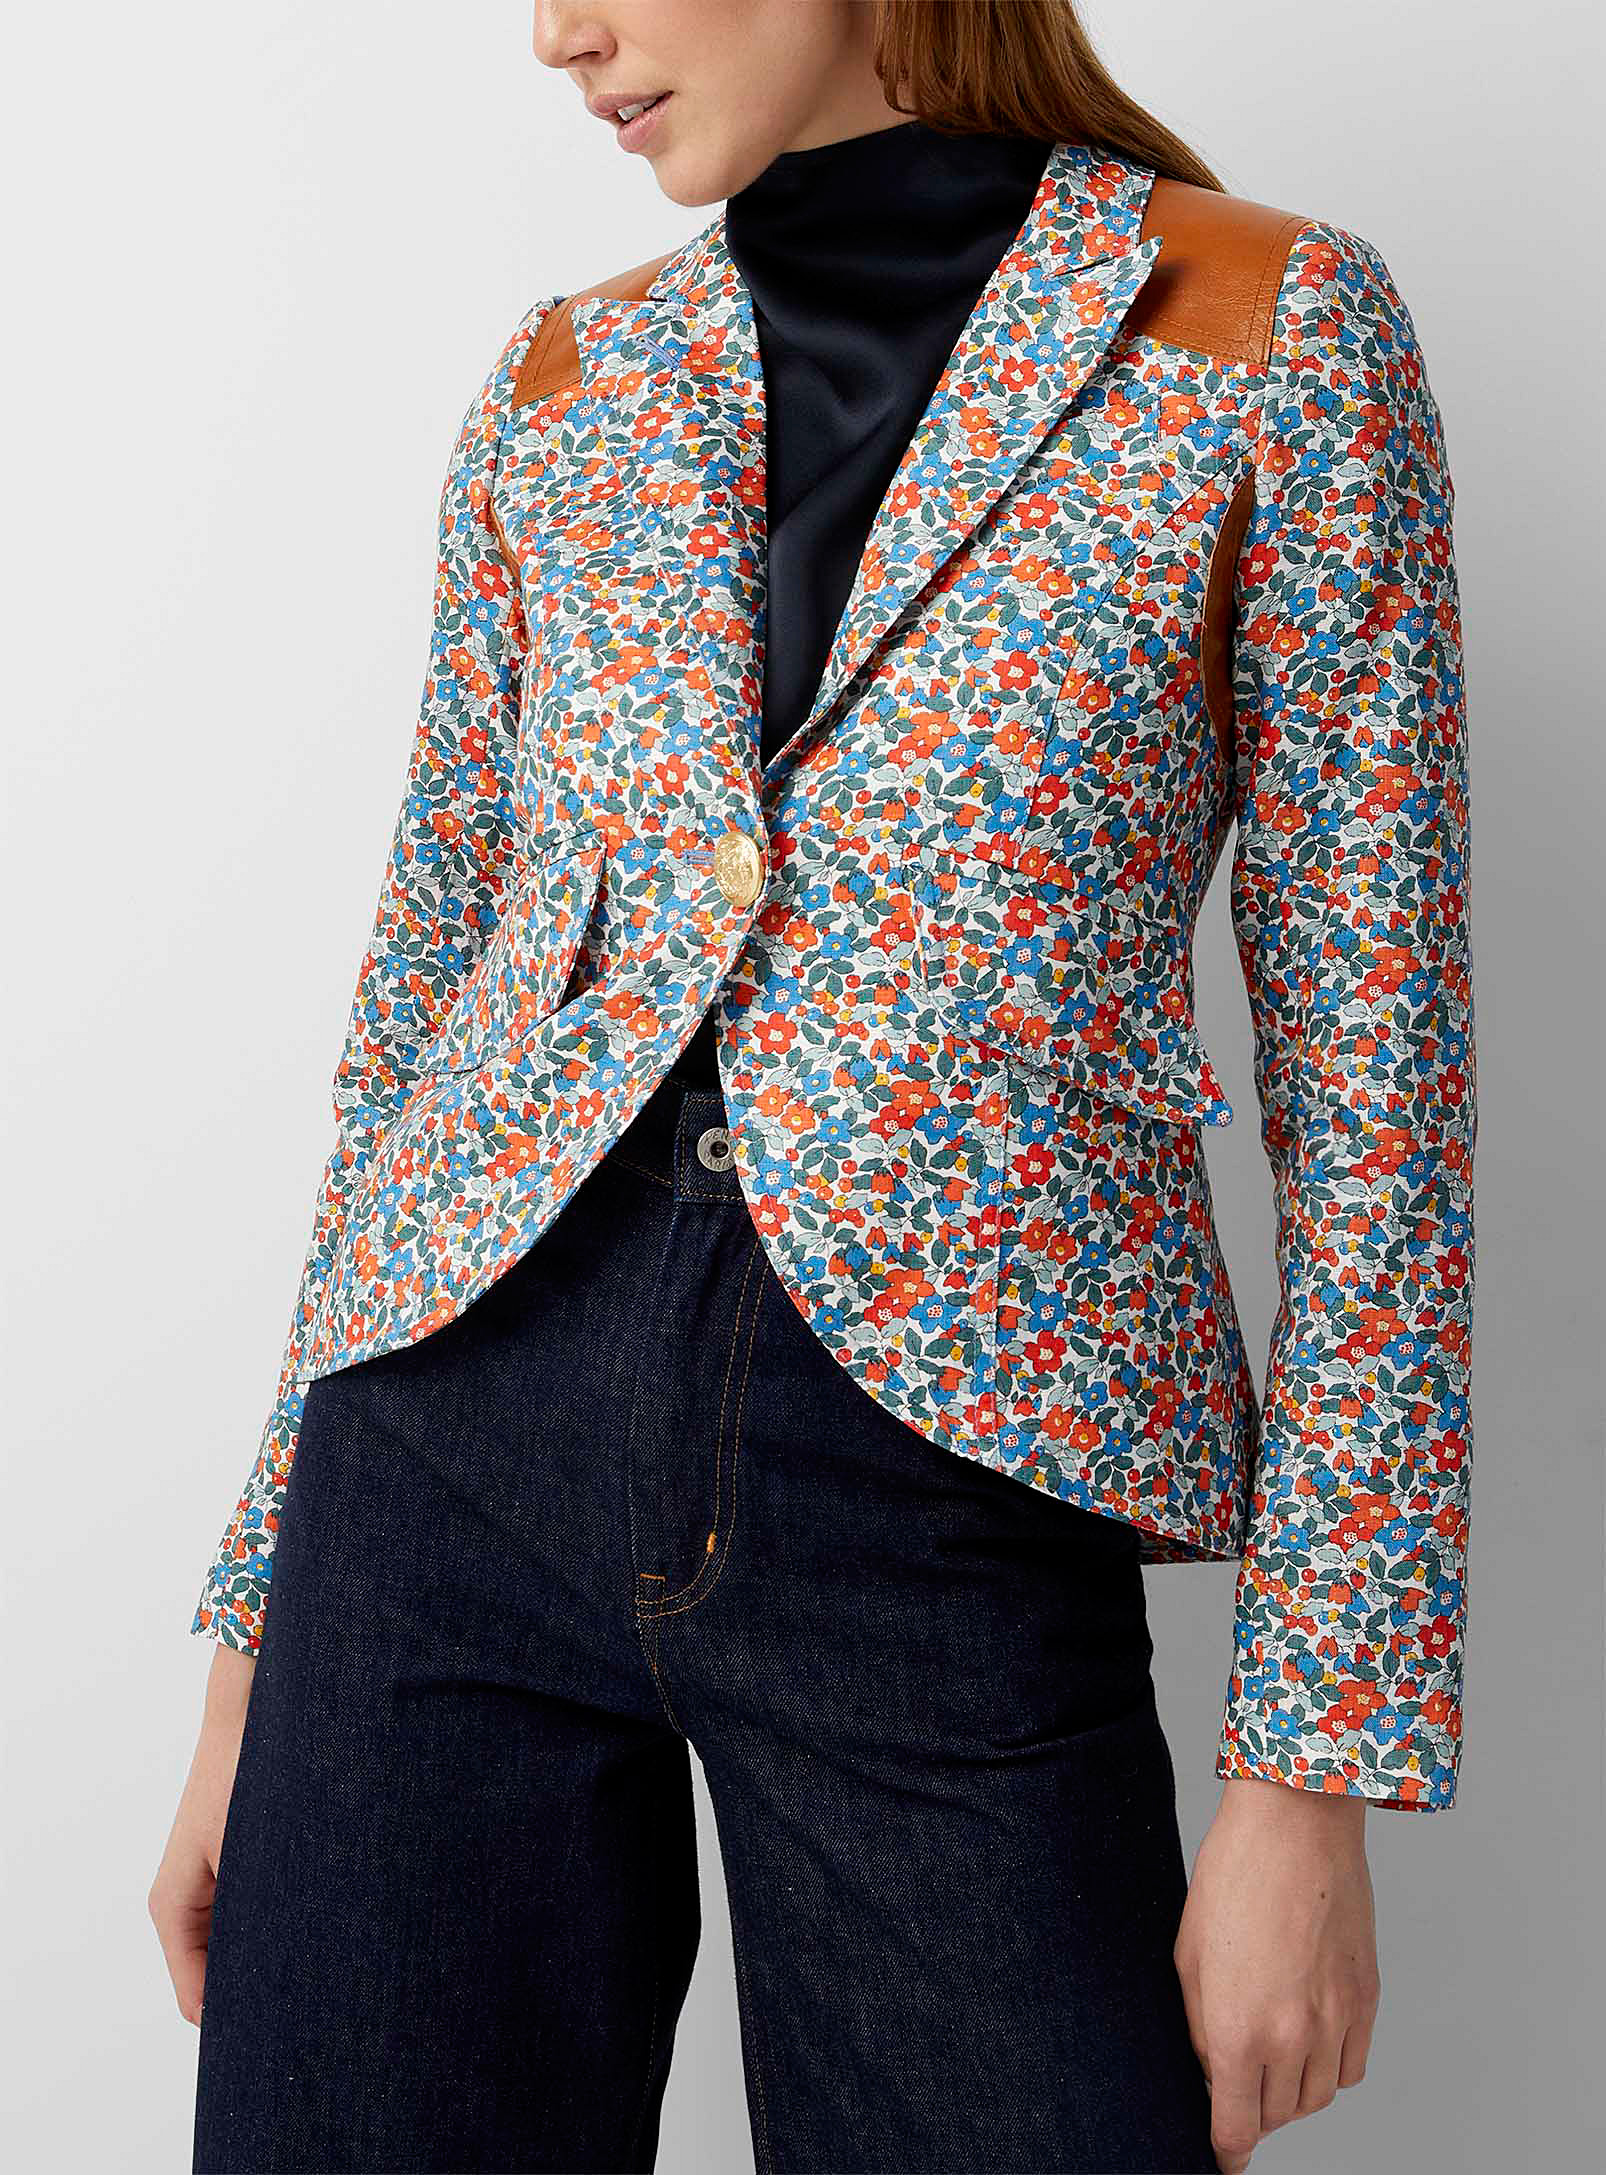 Smythe - Women's Leather yokes floral Blazer Jacket | Square One